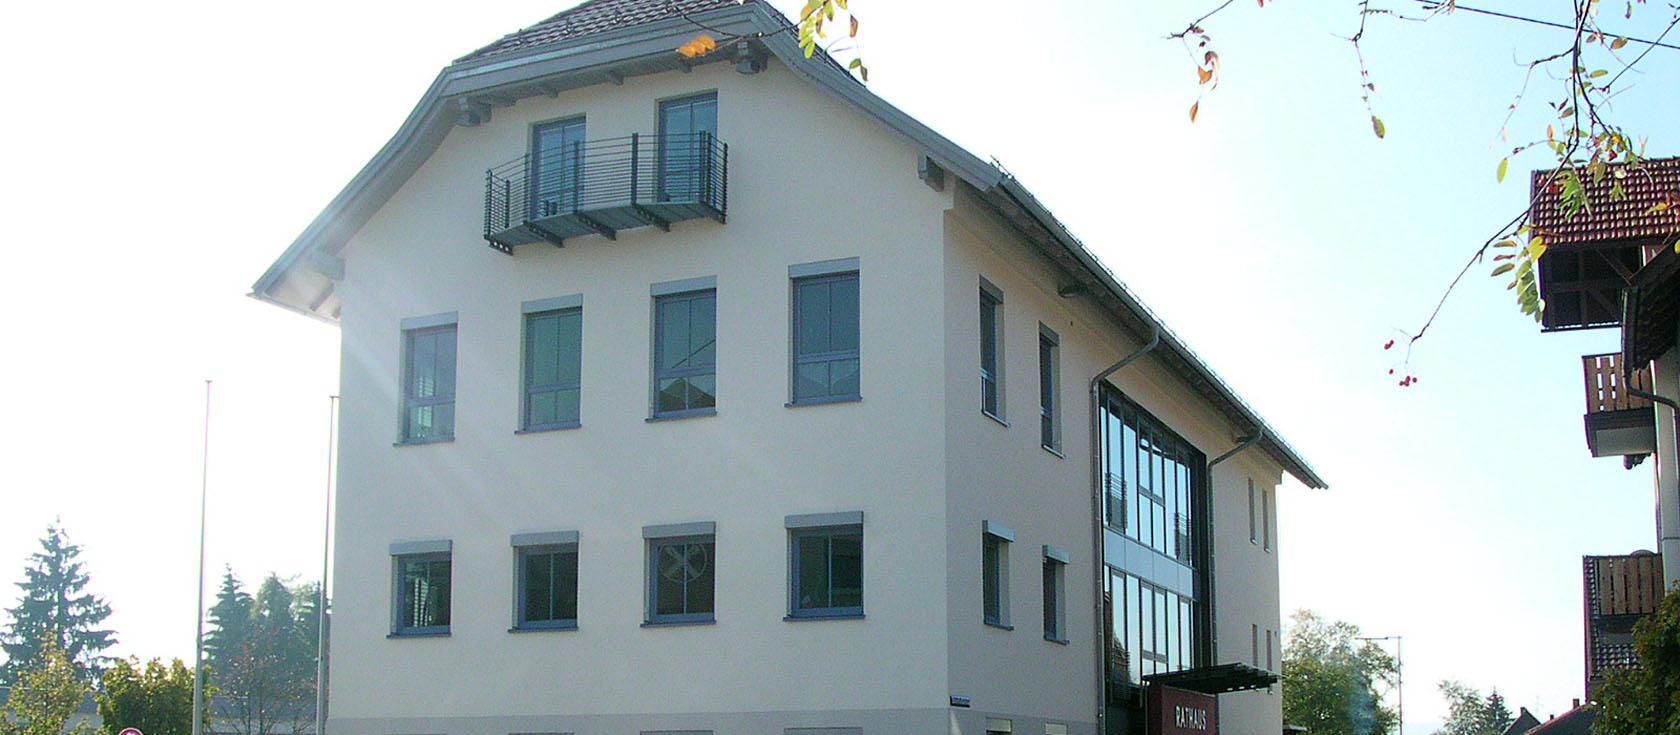 Totalsanierung und Anbau Rathaus Durach